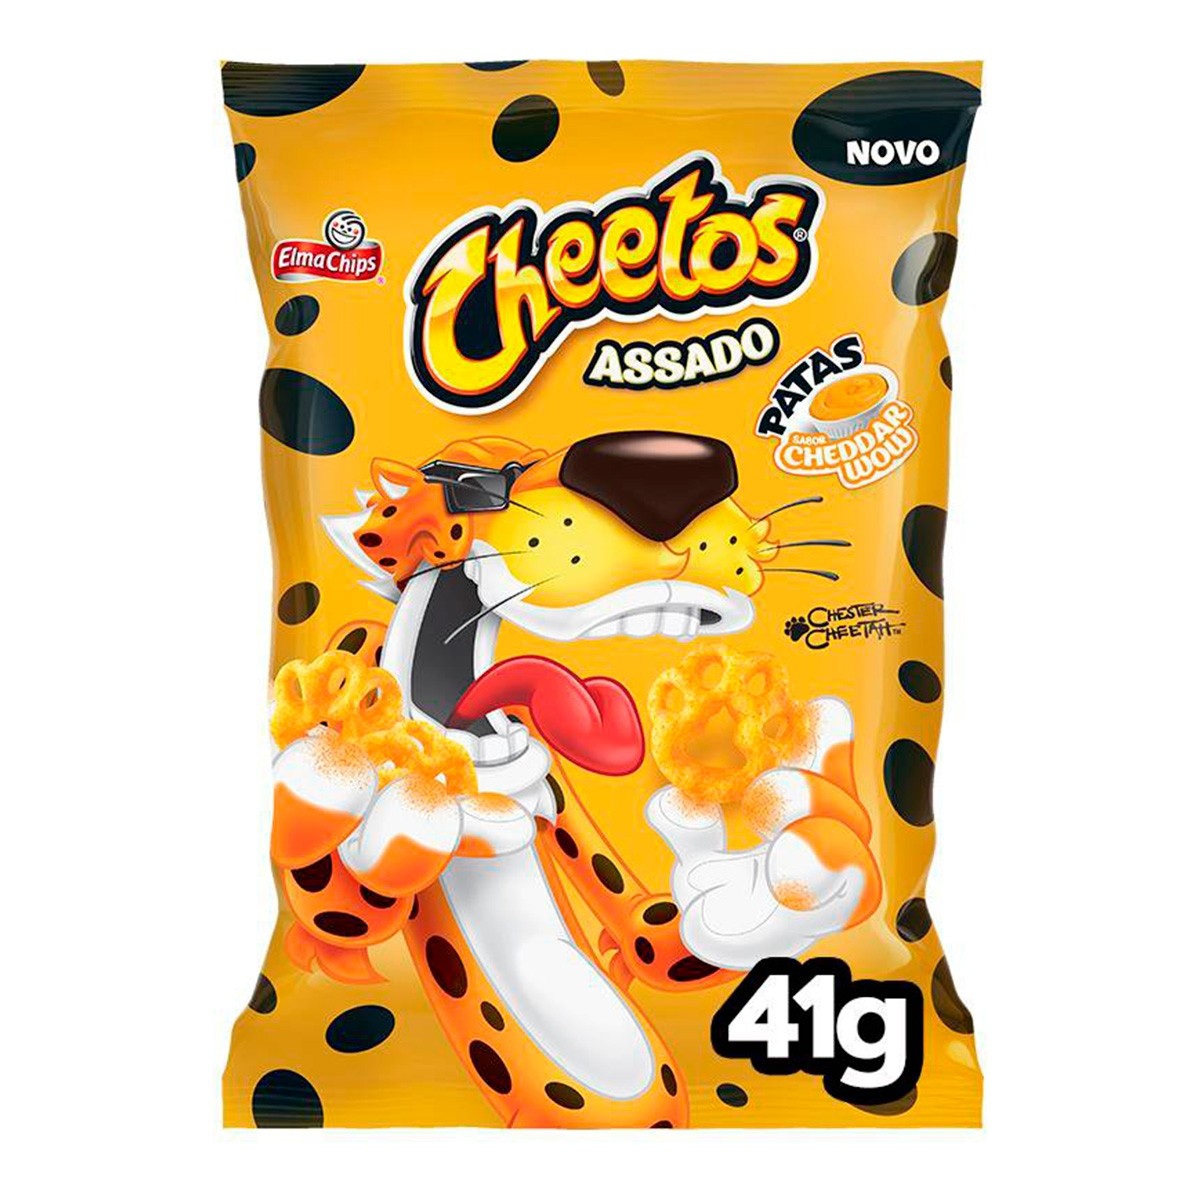 Comprar Salgadinho Cheetos Crunchy Super Cheddar 78G